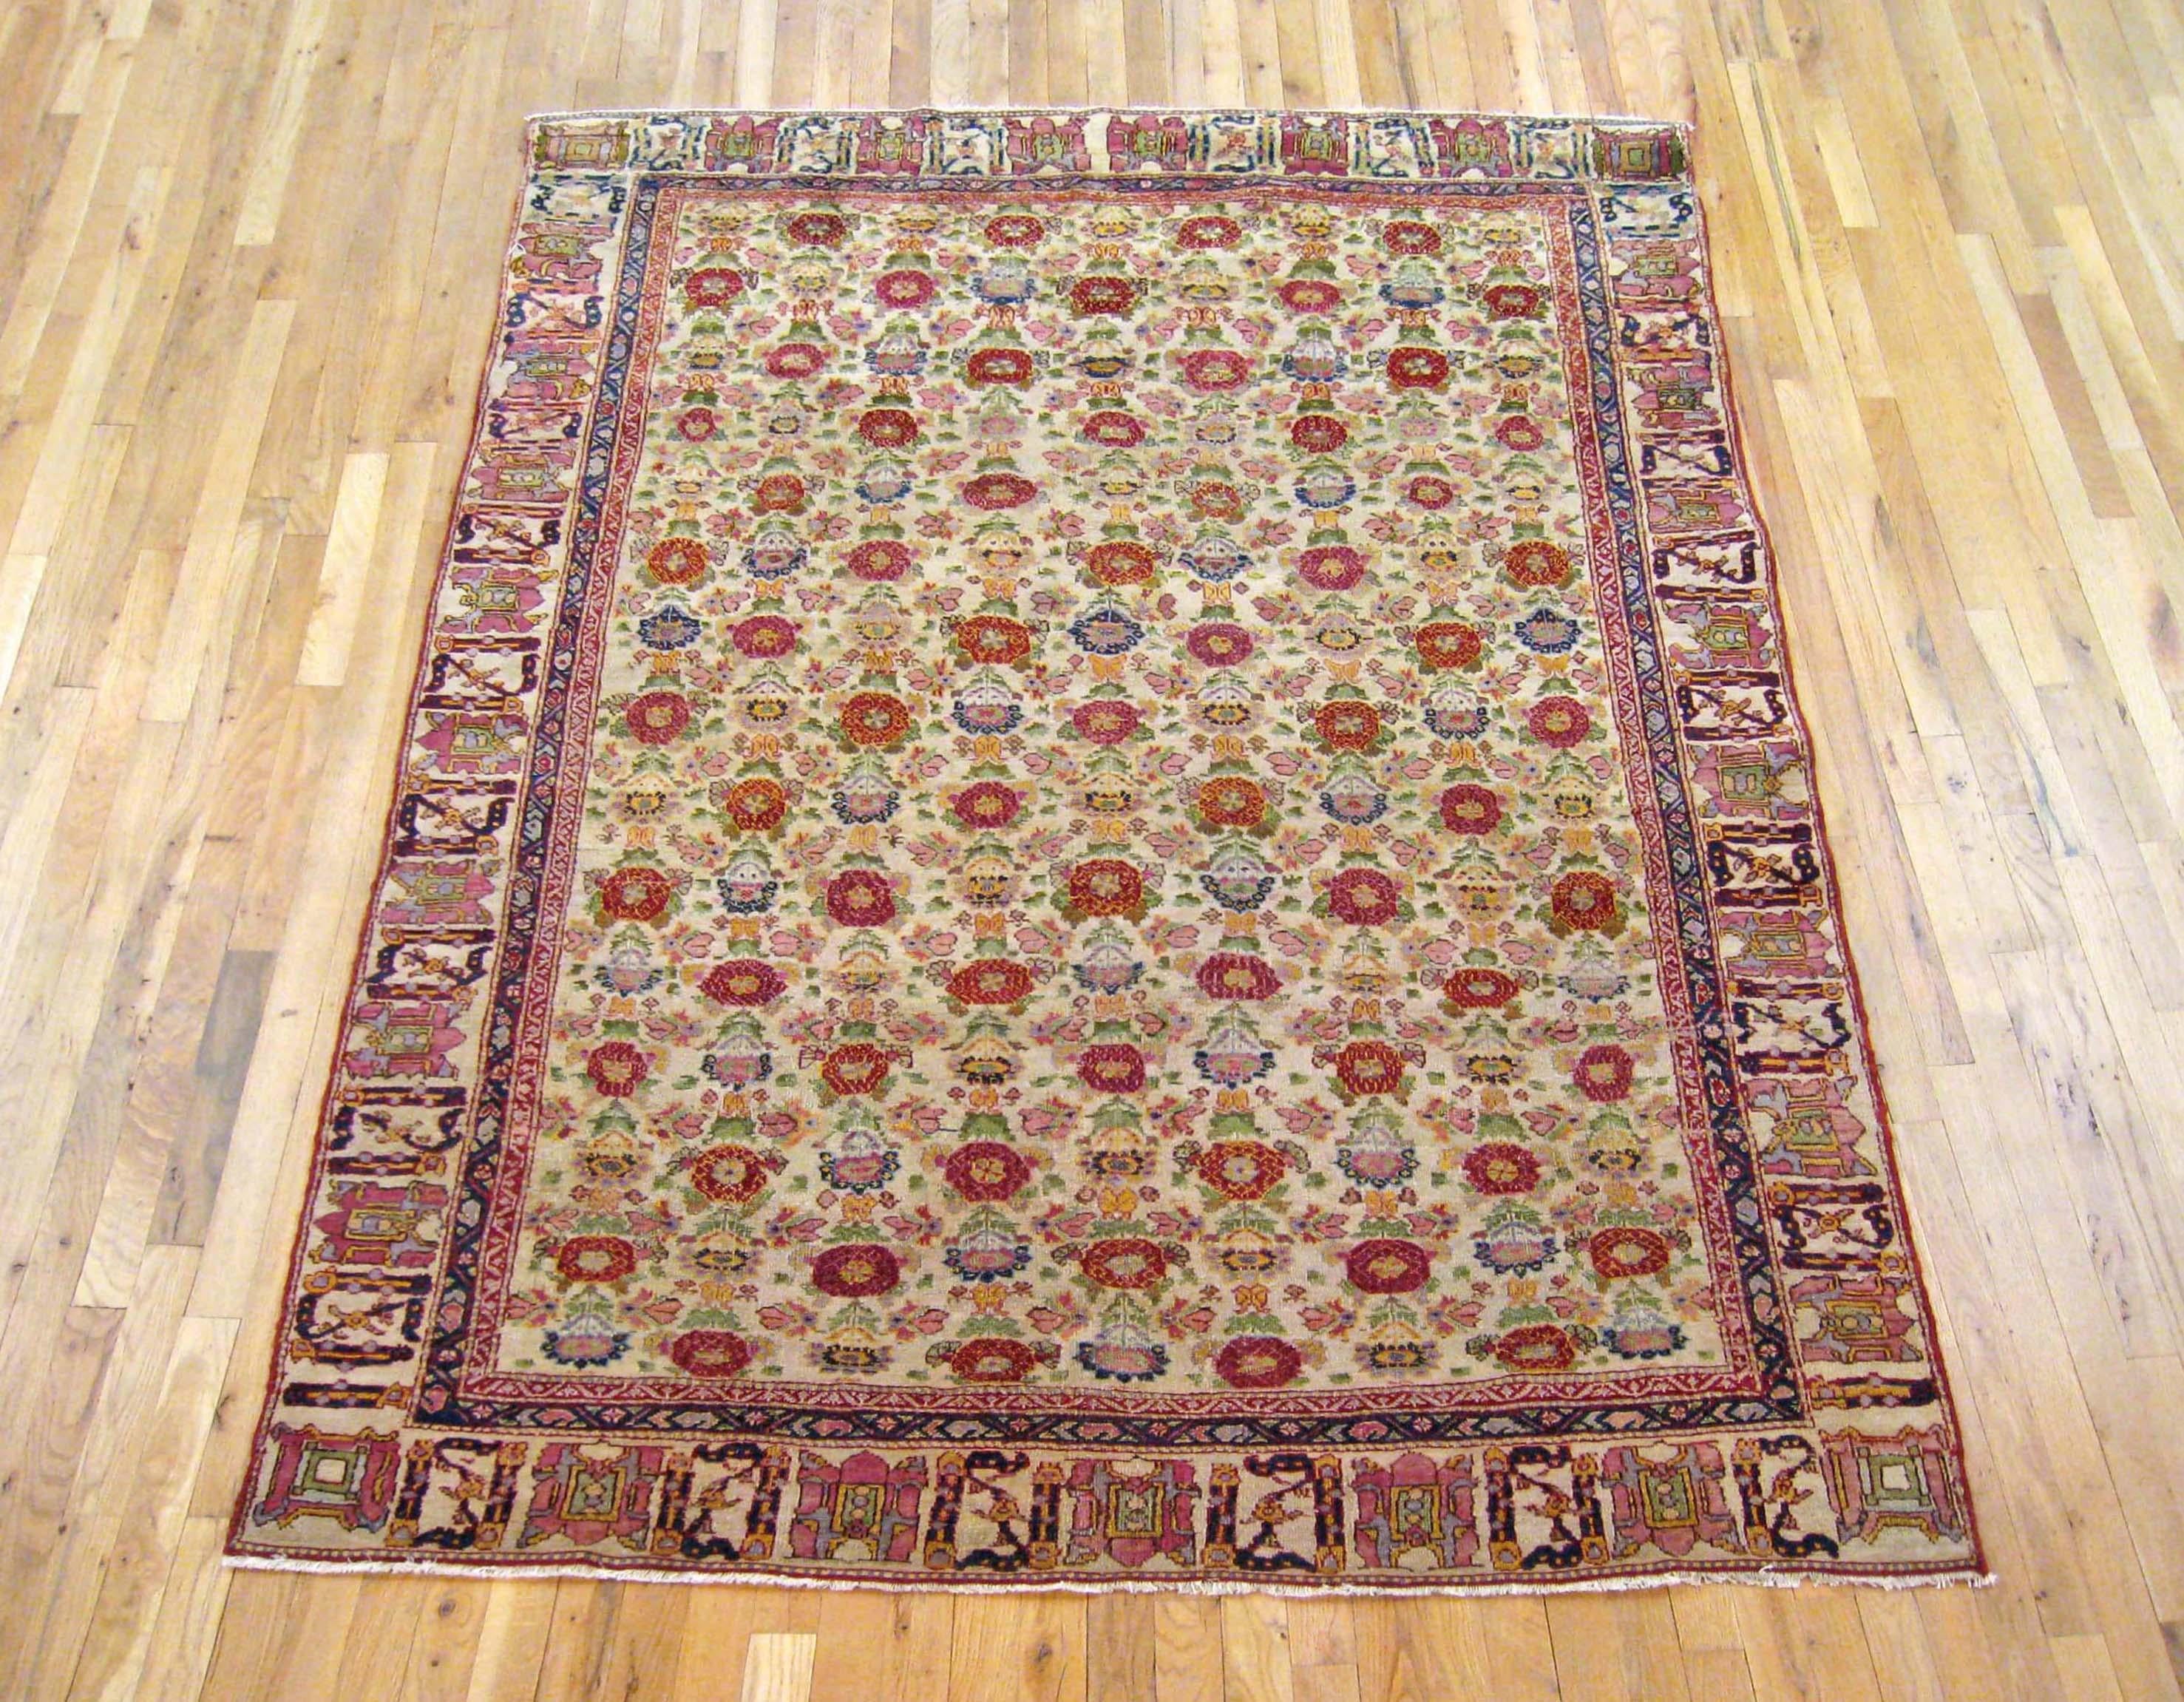 Antique Perisan Tabriz Oriental carpet, circa 1900, Small Sized

An antique Persian Tabriz oriental carpet, circa 1900. Size: 7'2